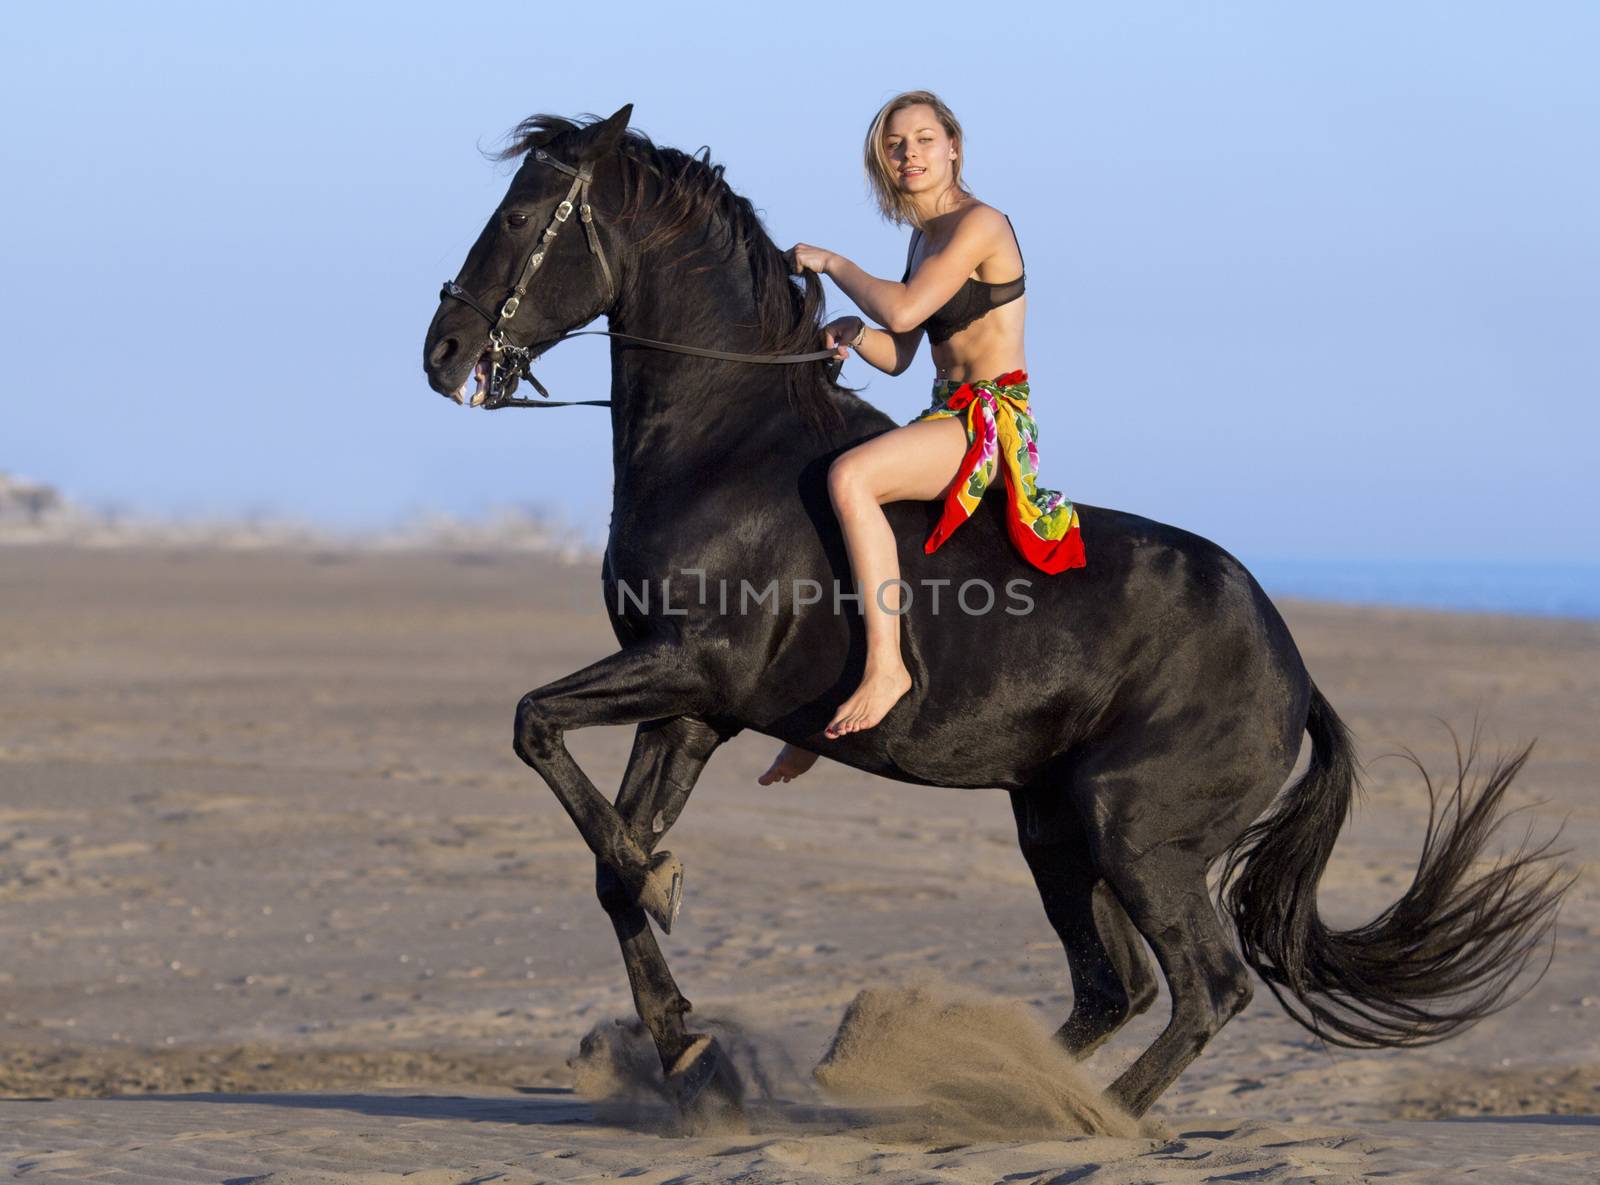 horsewoman on the beach by cynoclub